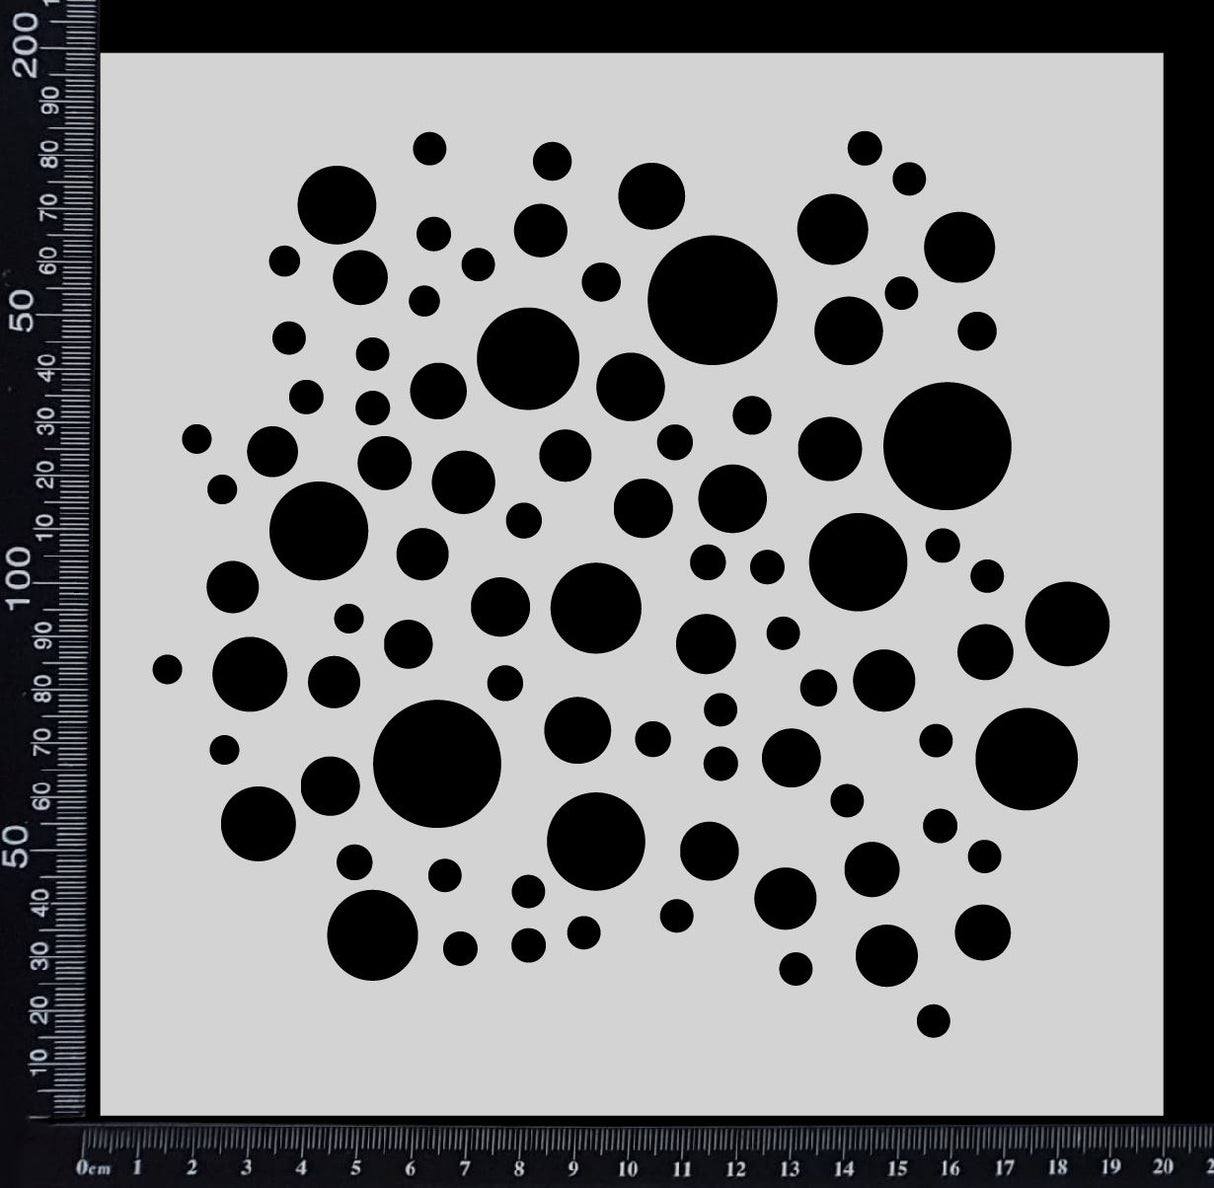 Bubble Cluster - Stencil - 200mm x 200mm